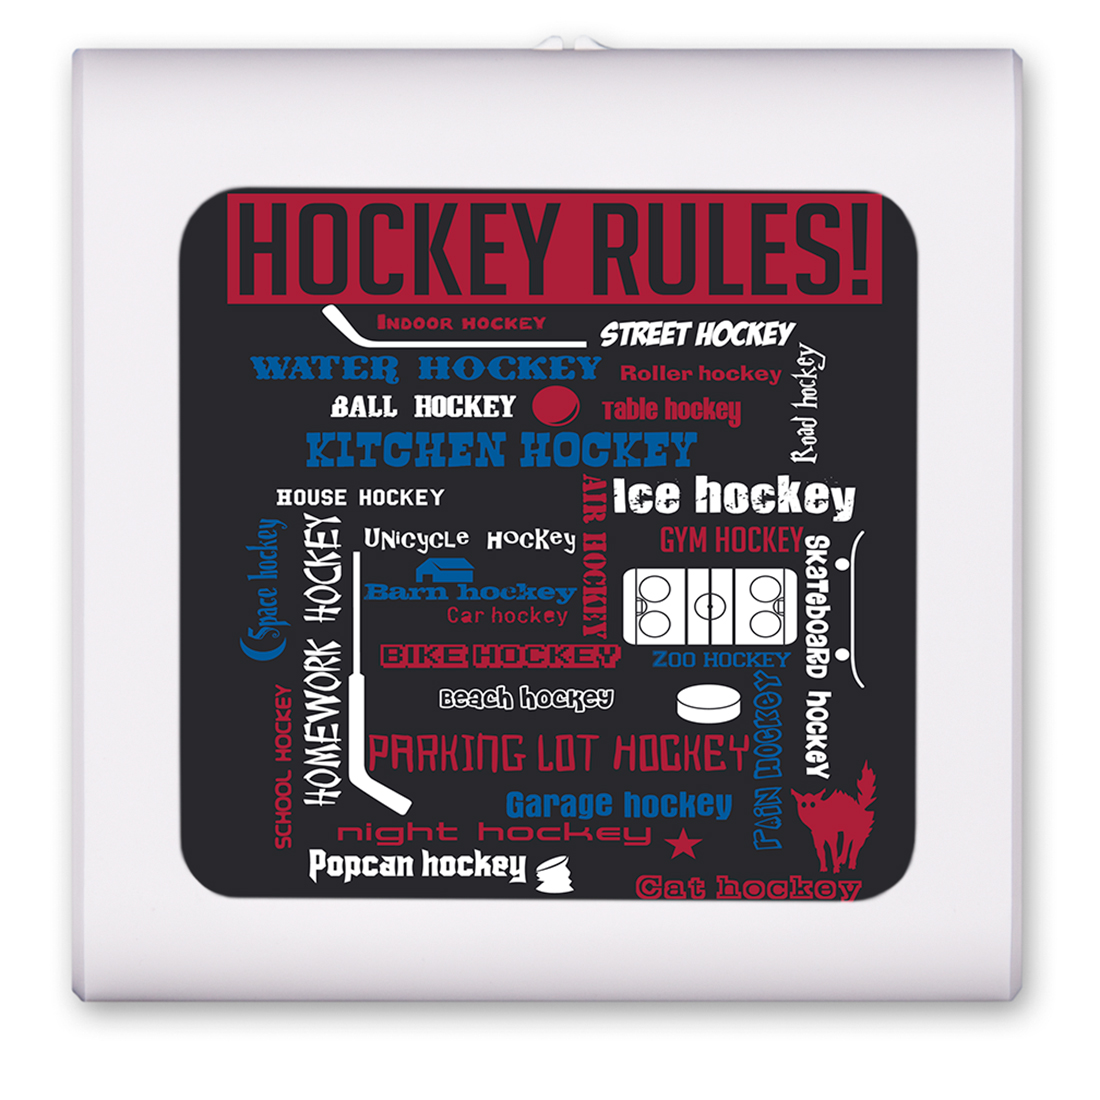 Hockey Rules - #8695